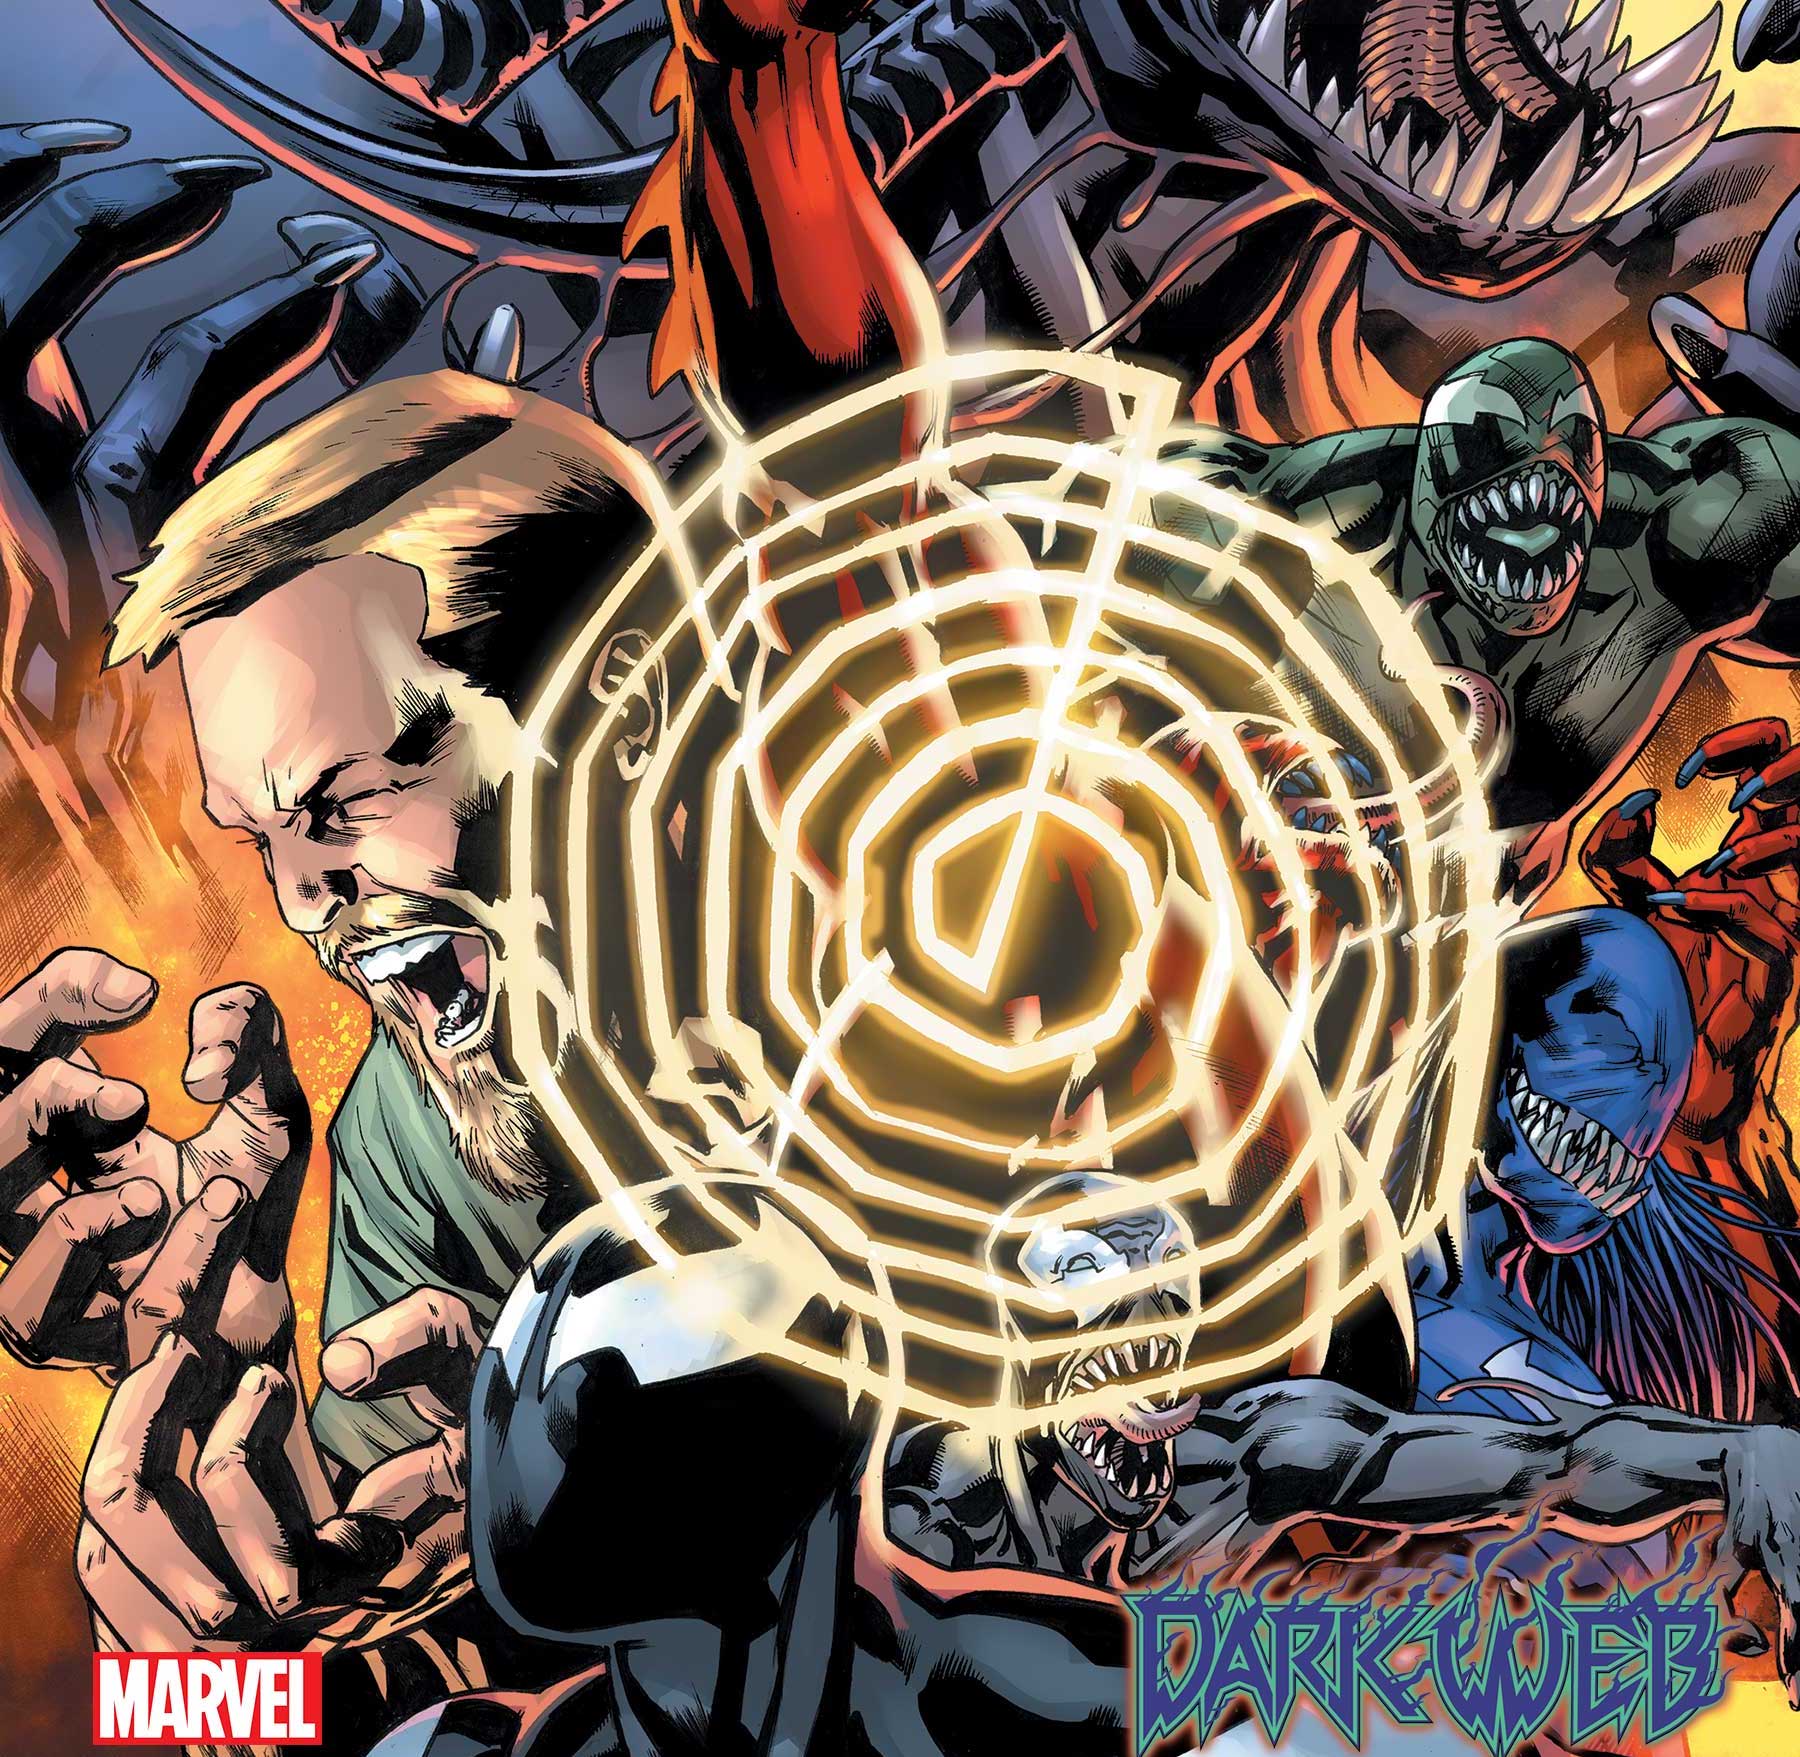 'Venom' #13 to tie into Marvel's 'Dark Web' event